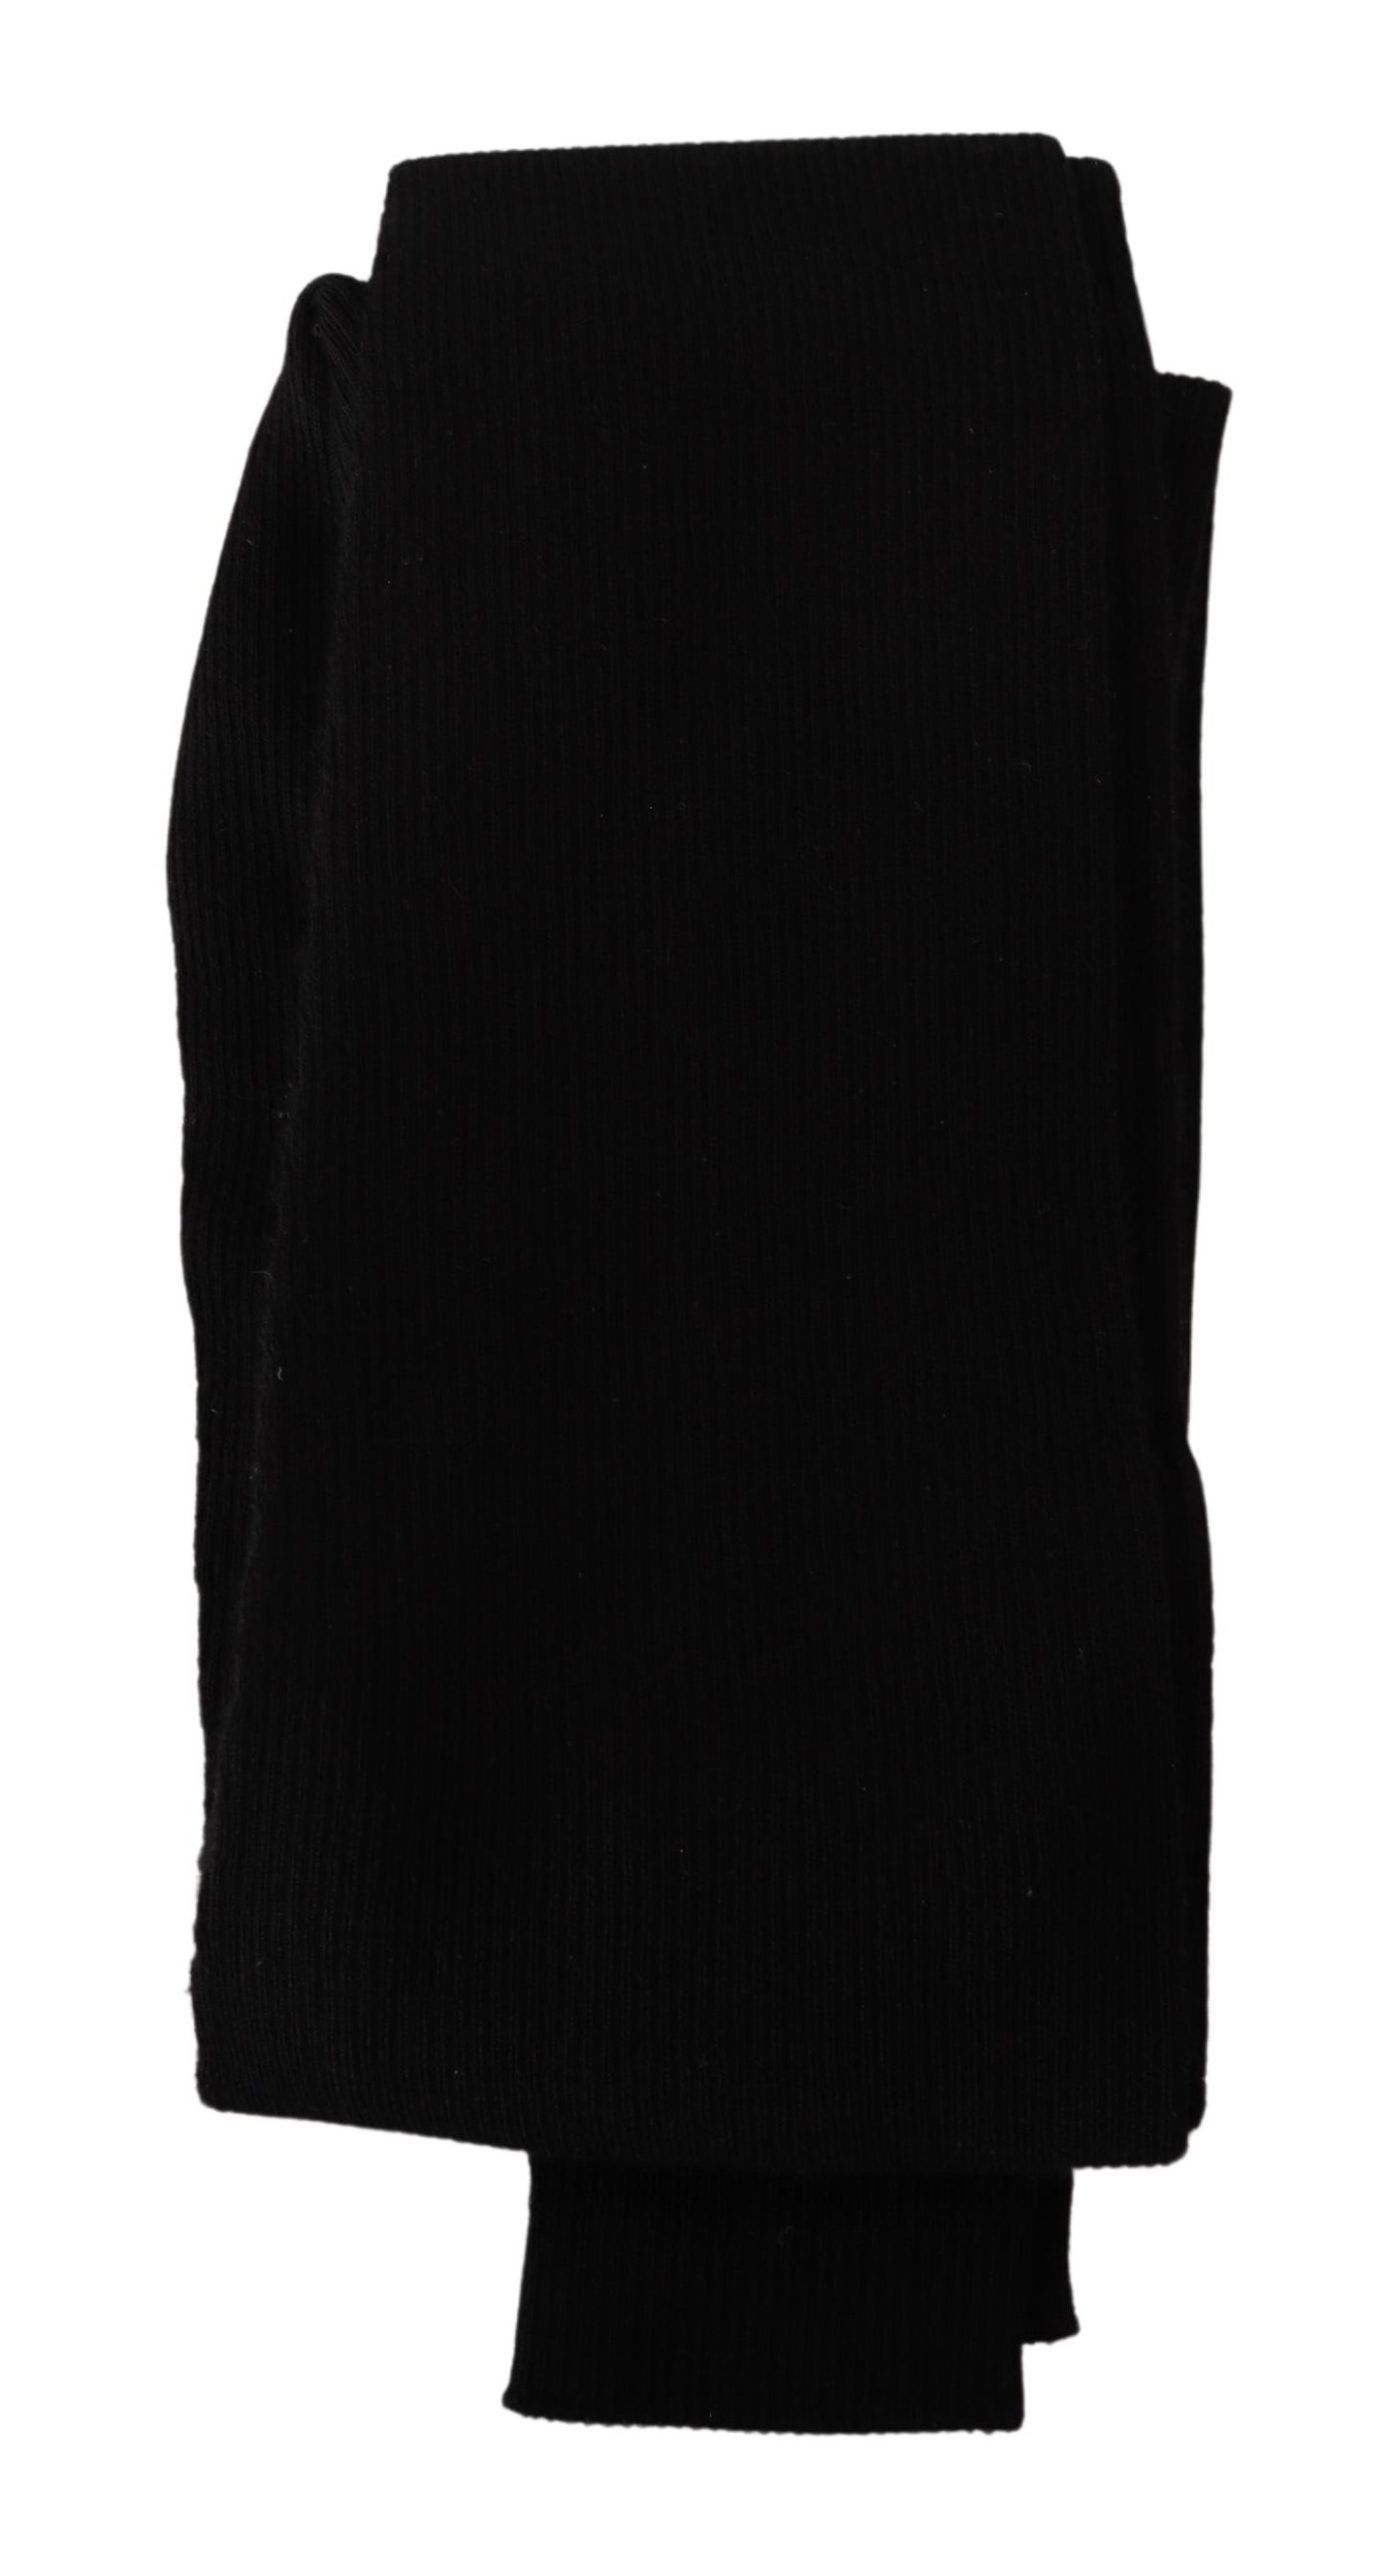 Elegant Black Cashmere Tights